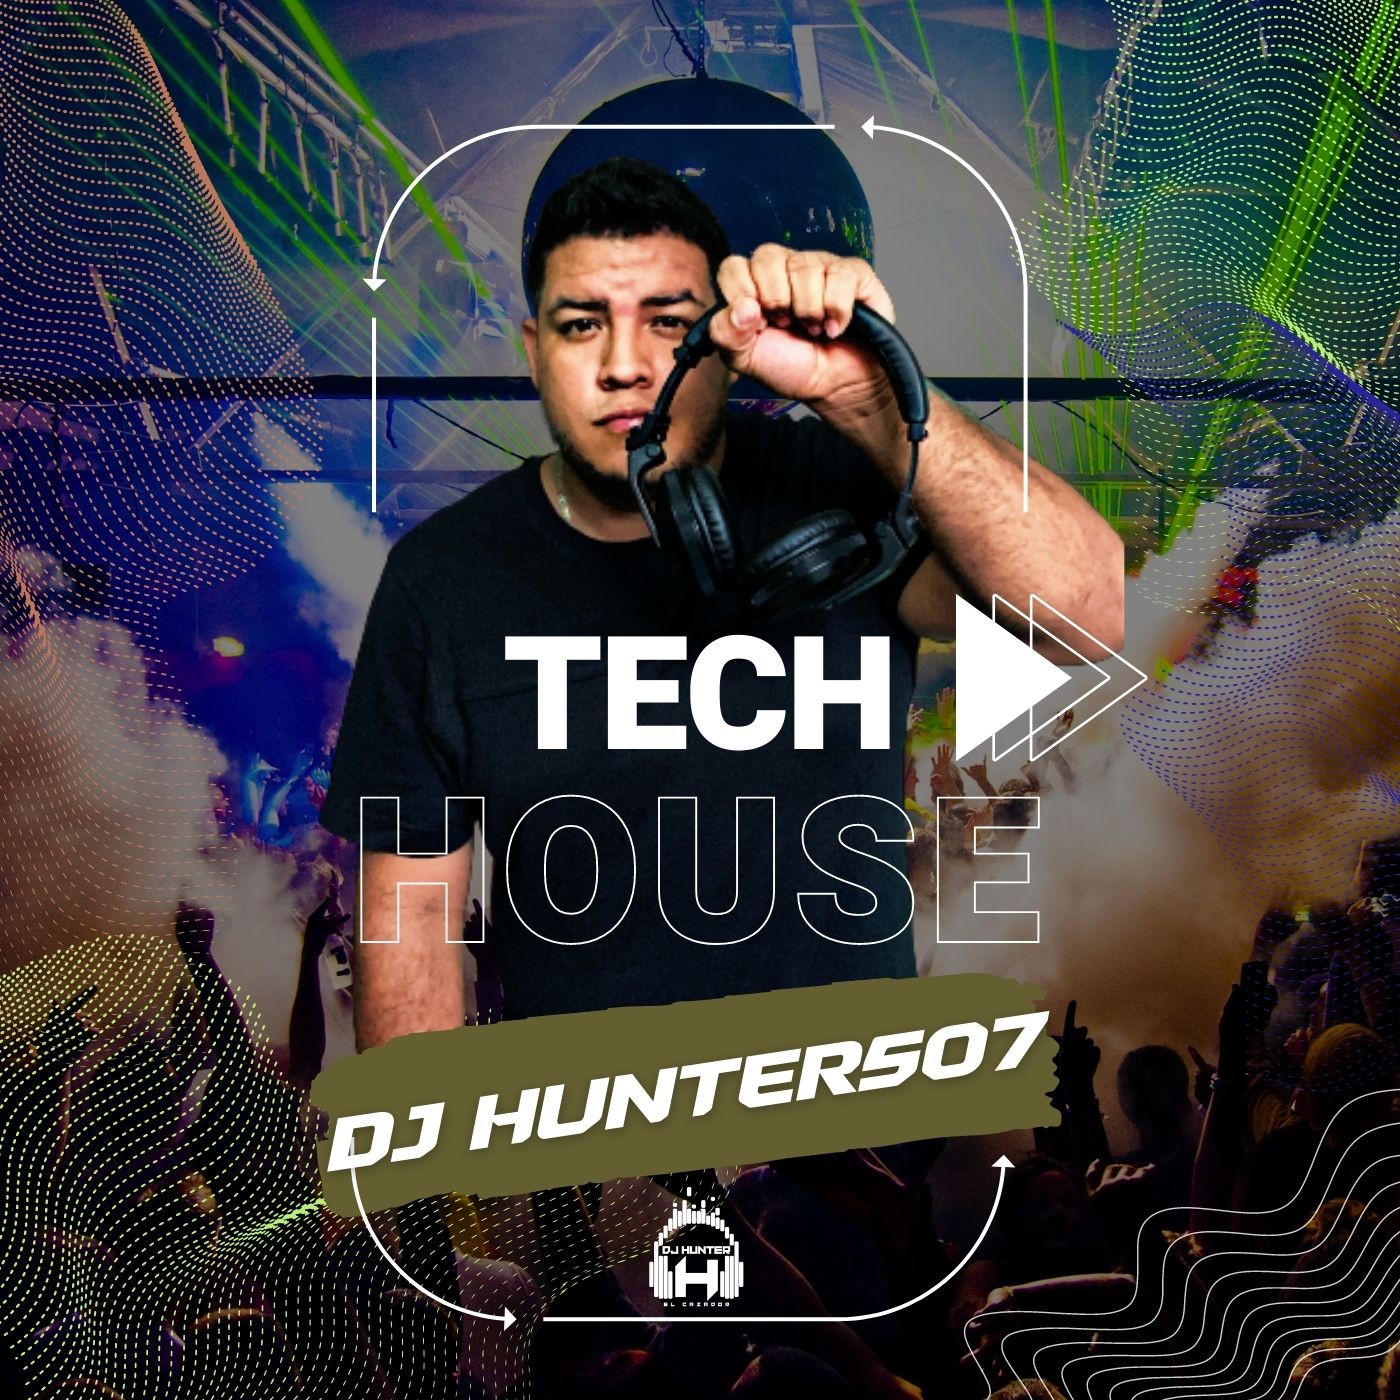 Dj Hunter507 - Tech House Mix.mp3